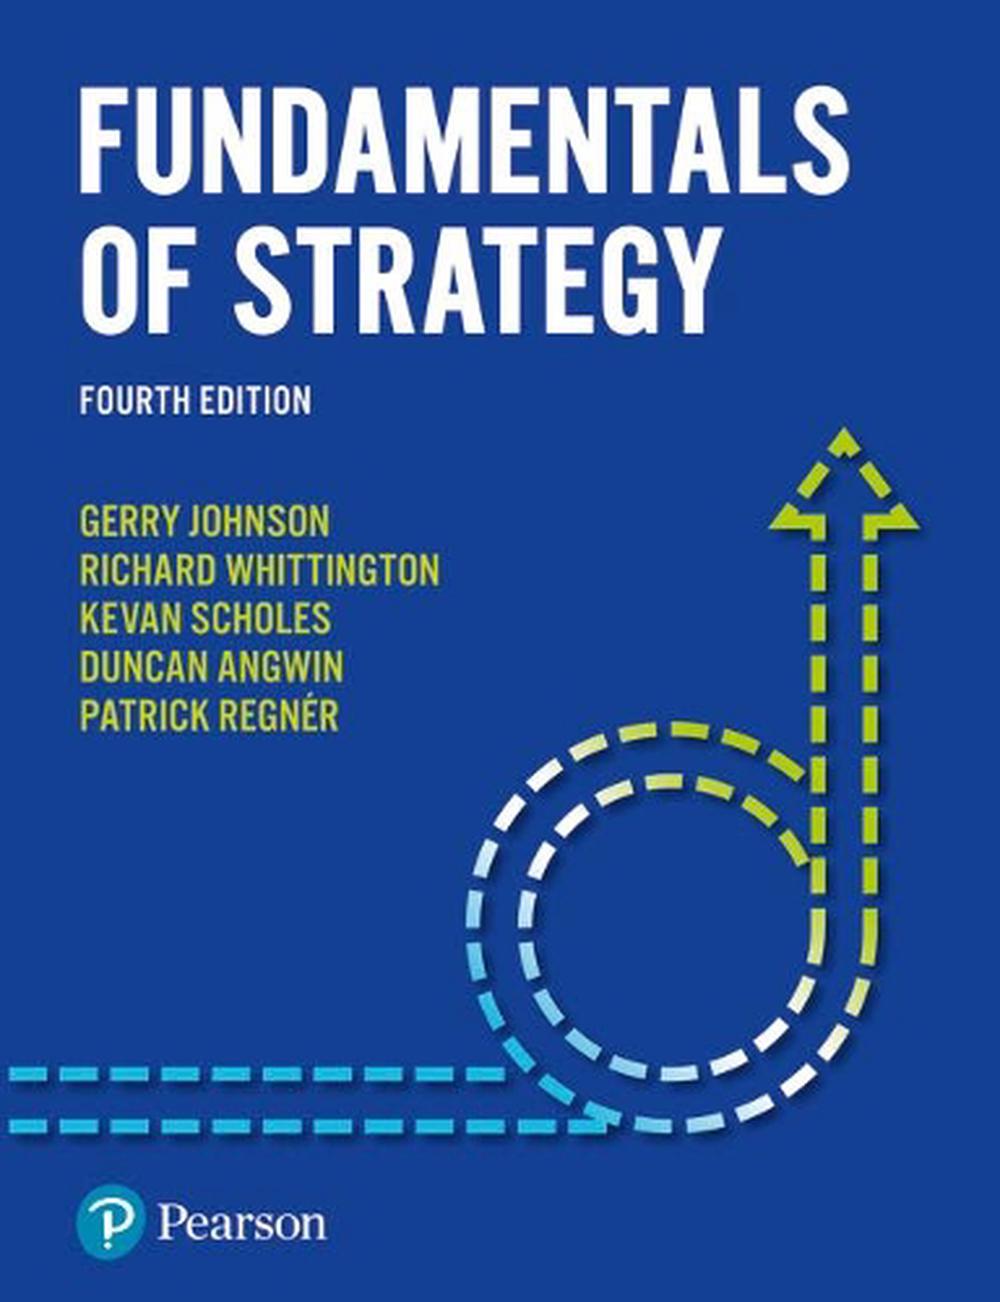 essentials of strategic management 4th edition pdf download